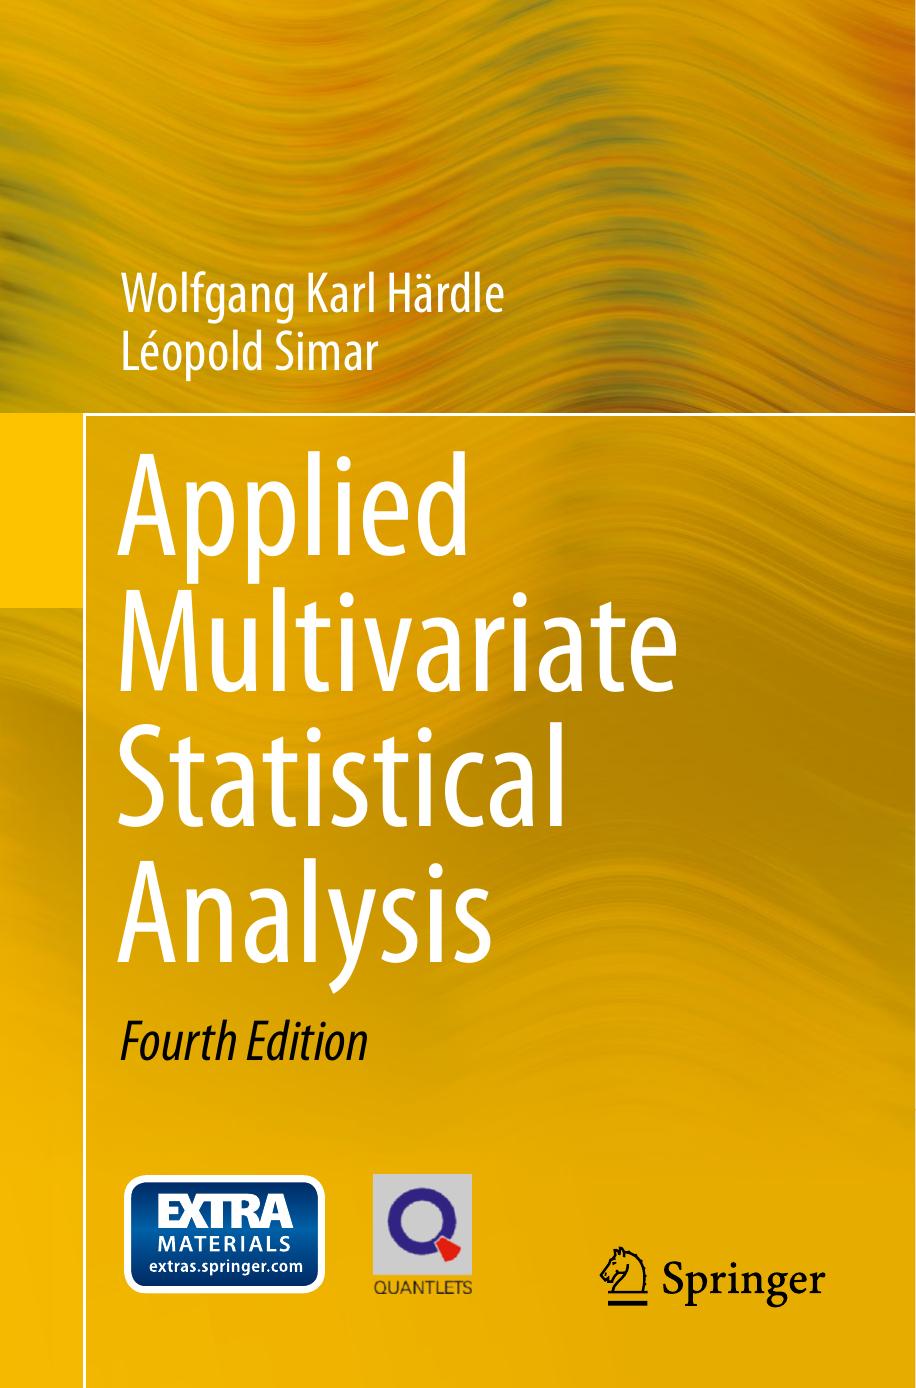 Applied Multivariate Statistical Analysis by Wolfgang Karl Härdle & Léopold Simar